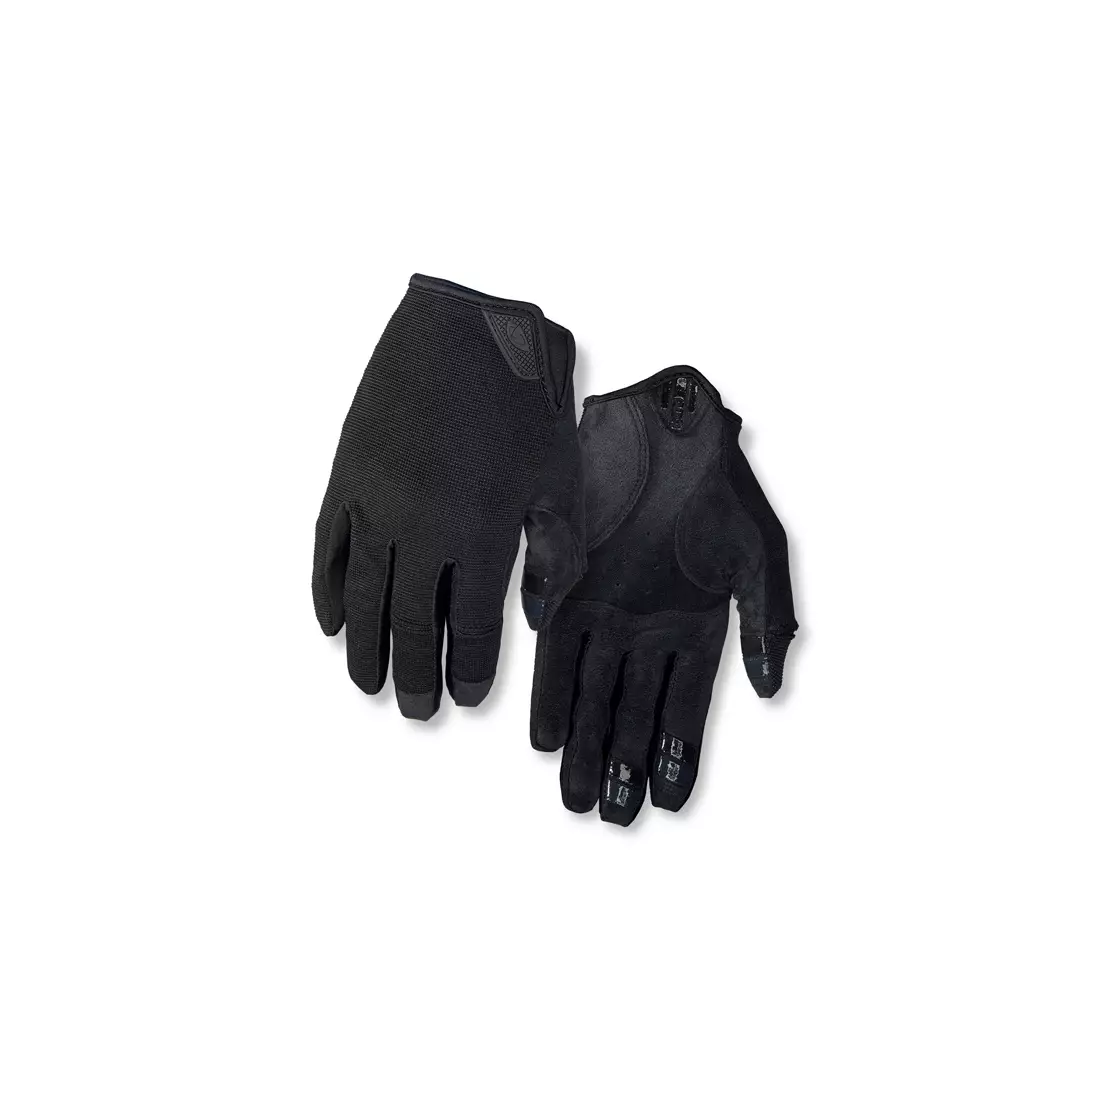 GIRO DND bicycle gloves, black